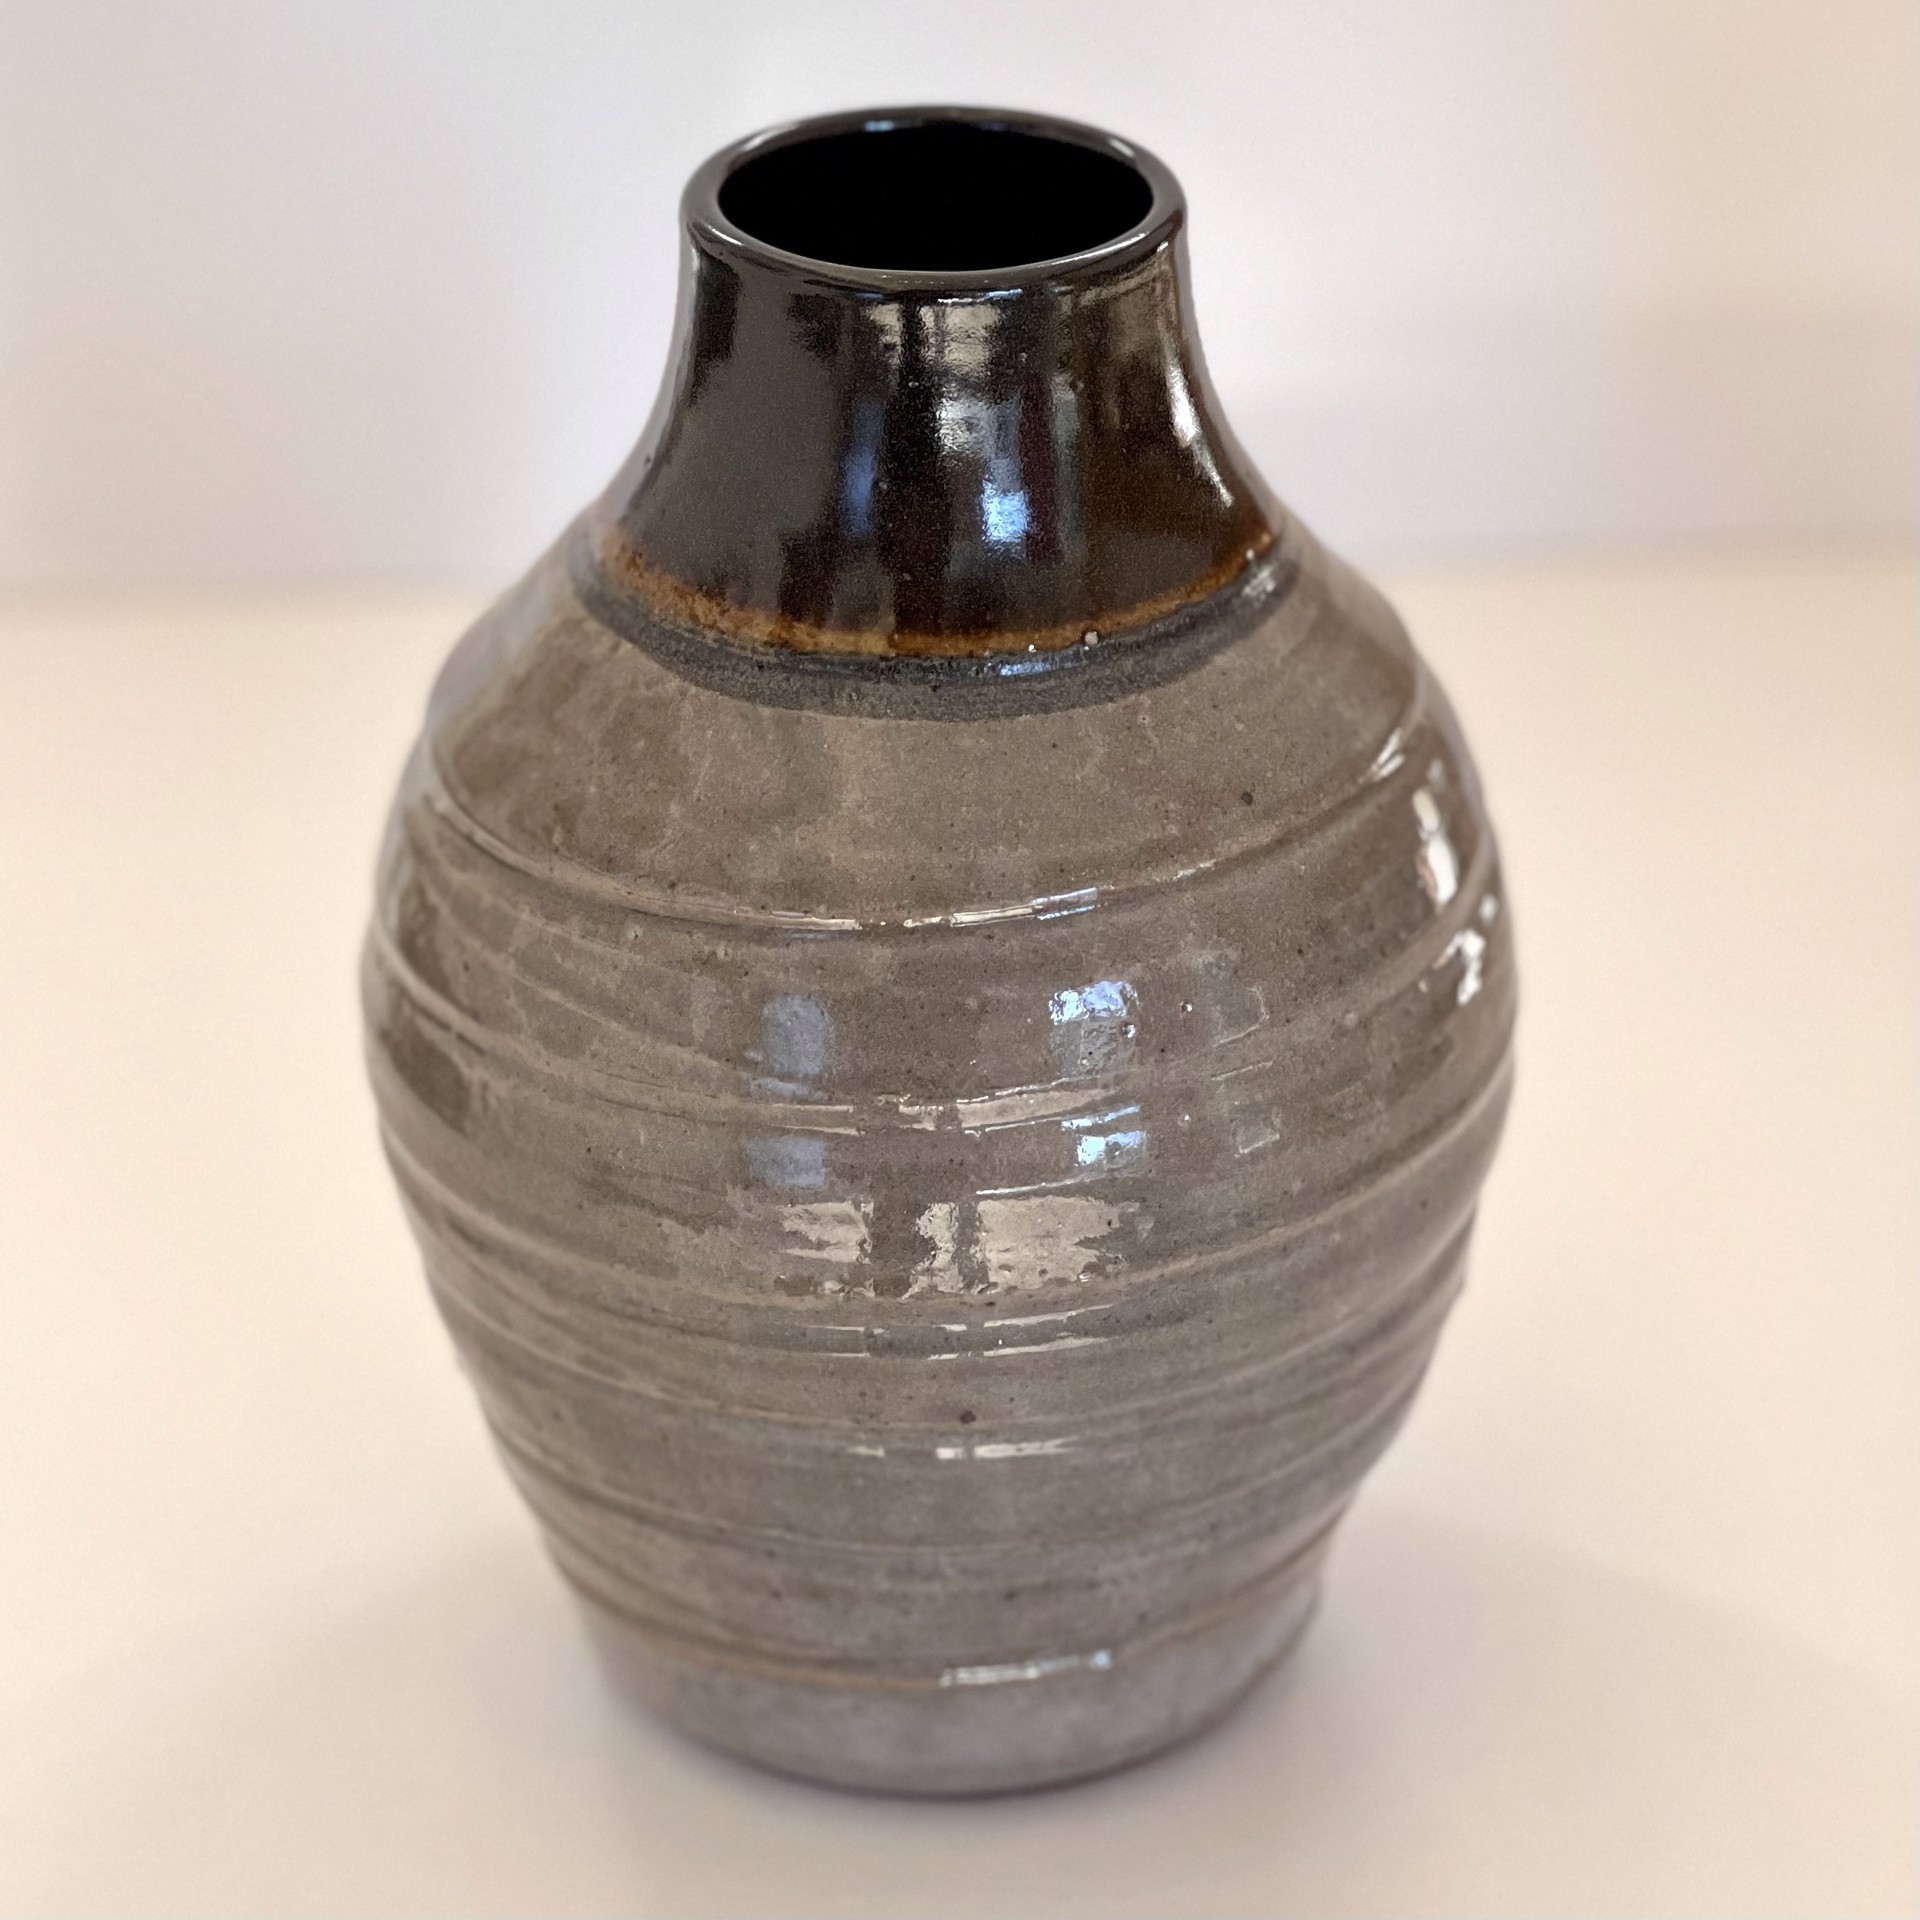 Vase 9 by David LaLomia